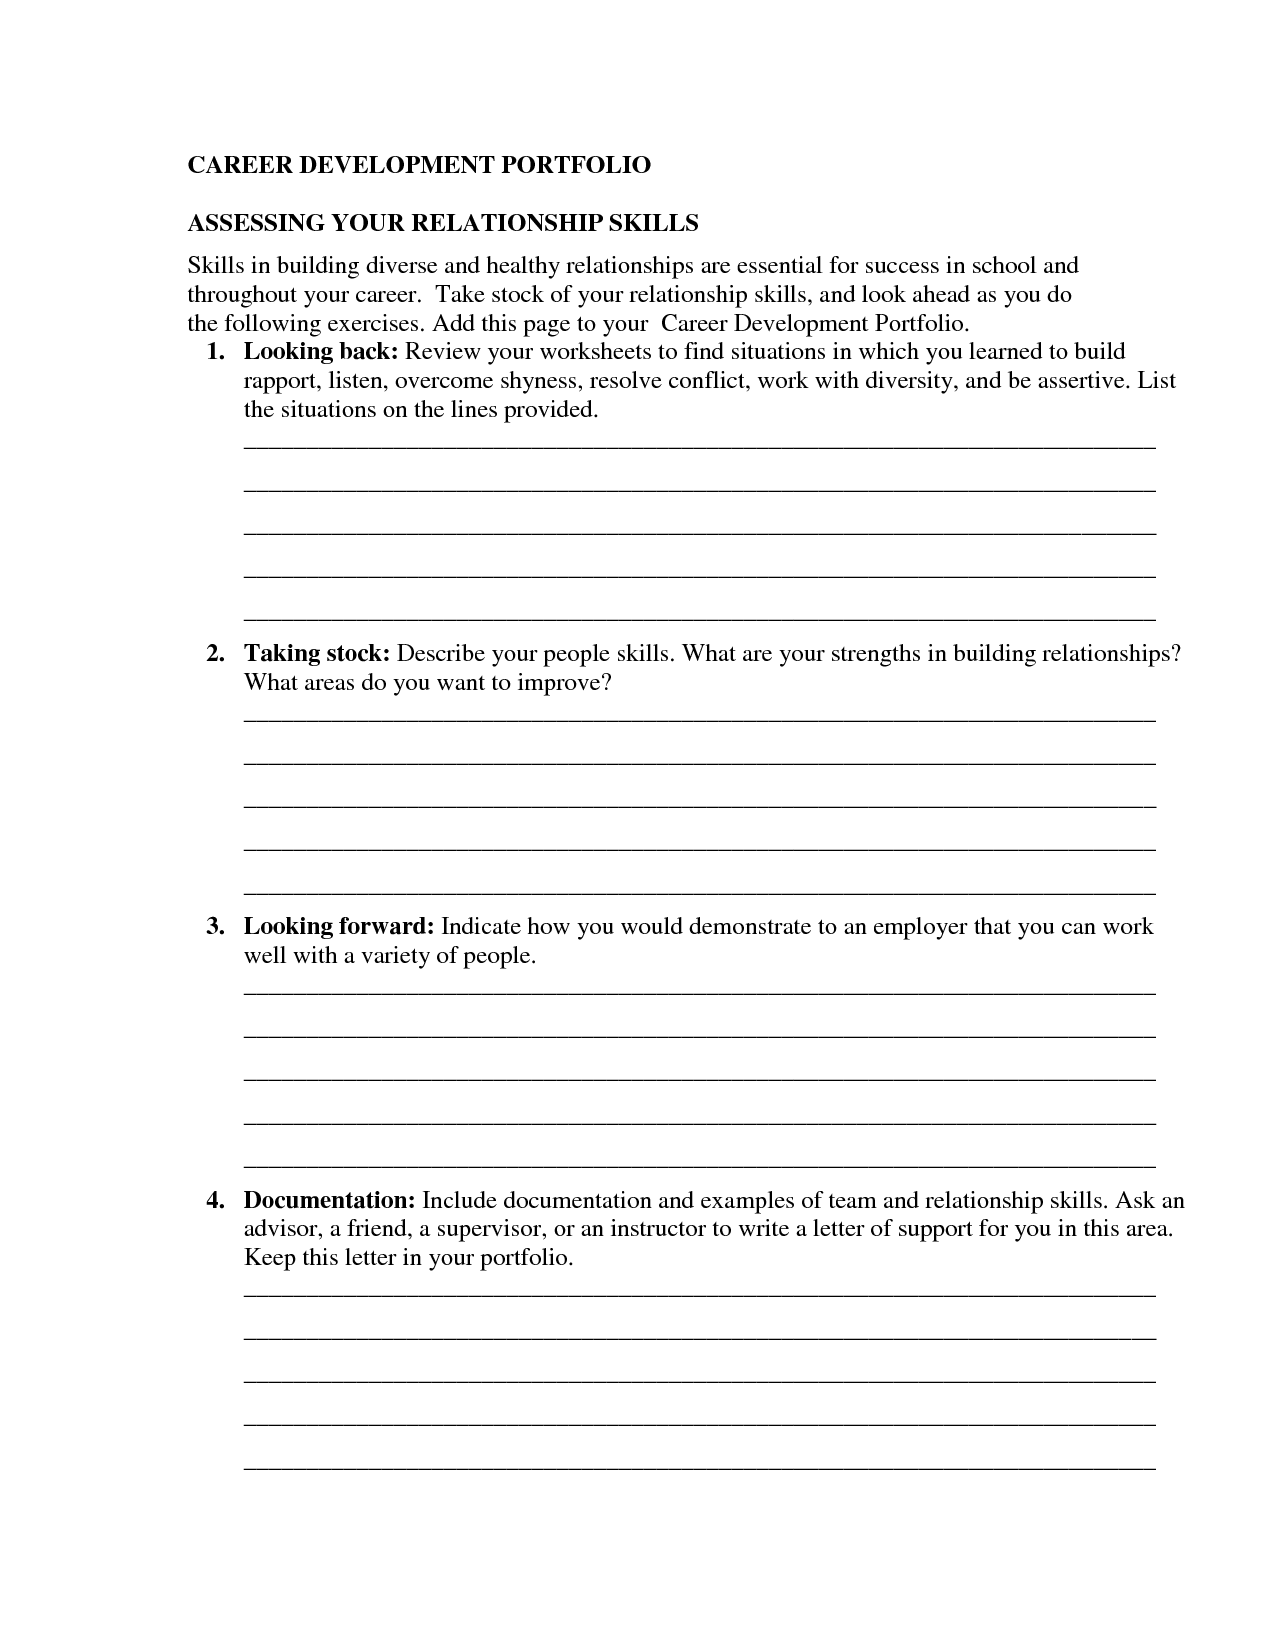 Building Healthy Relationships Worksheets Image